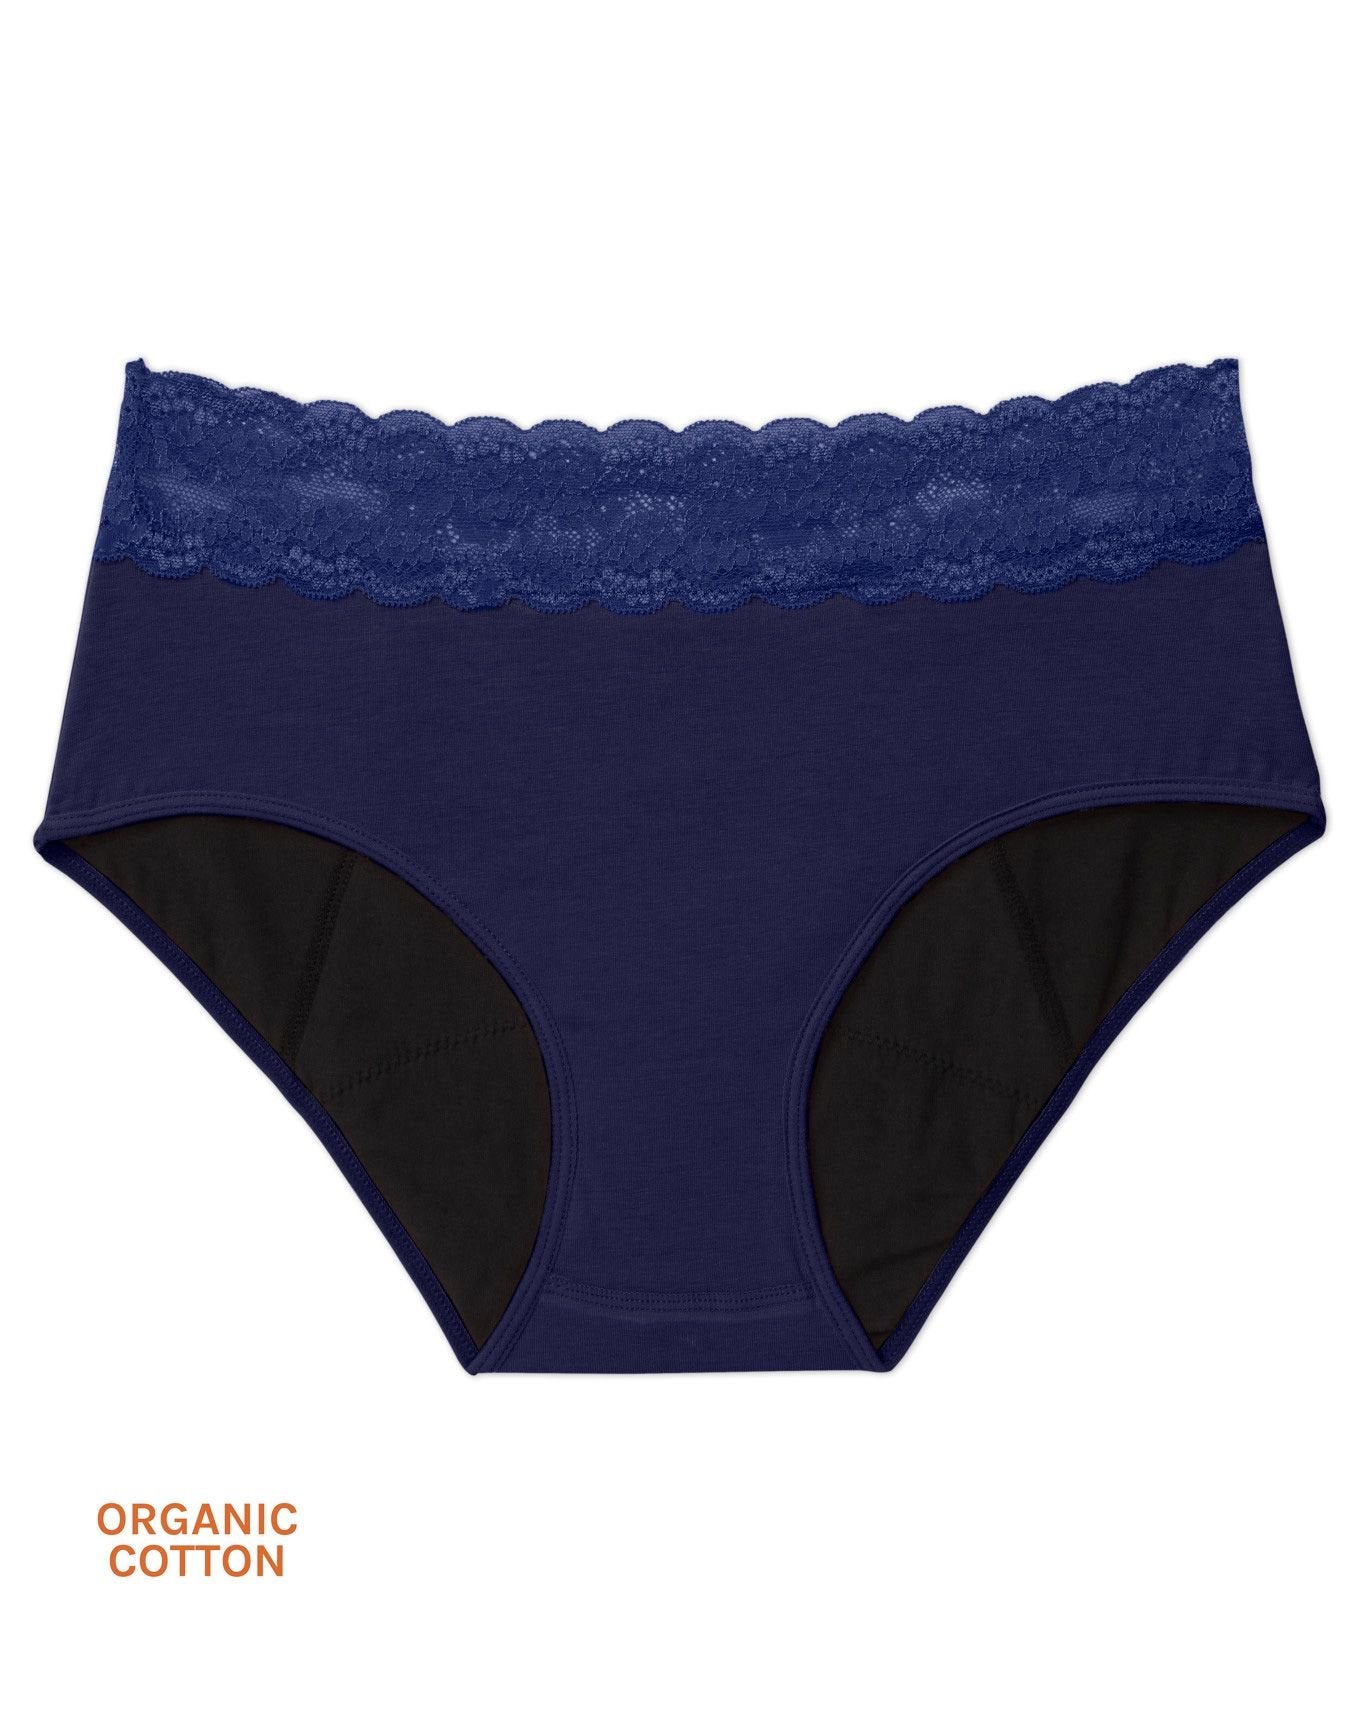 Joyja Ella period-proof panty in color Evening Blue and shape midi brief